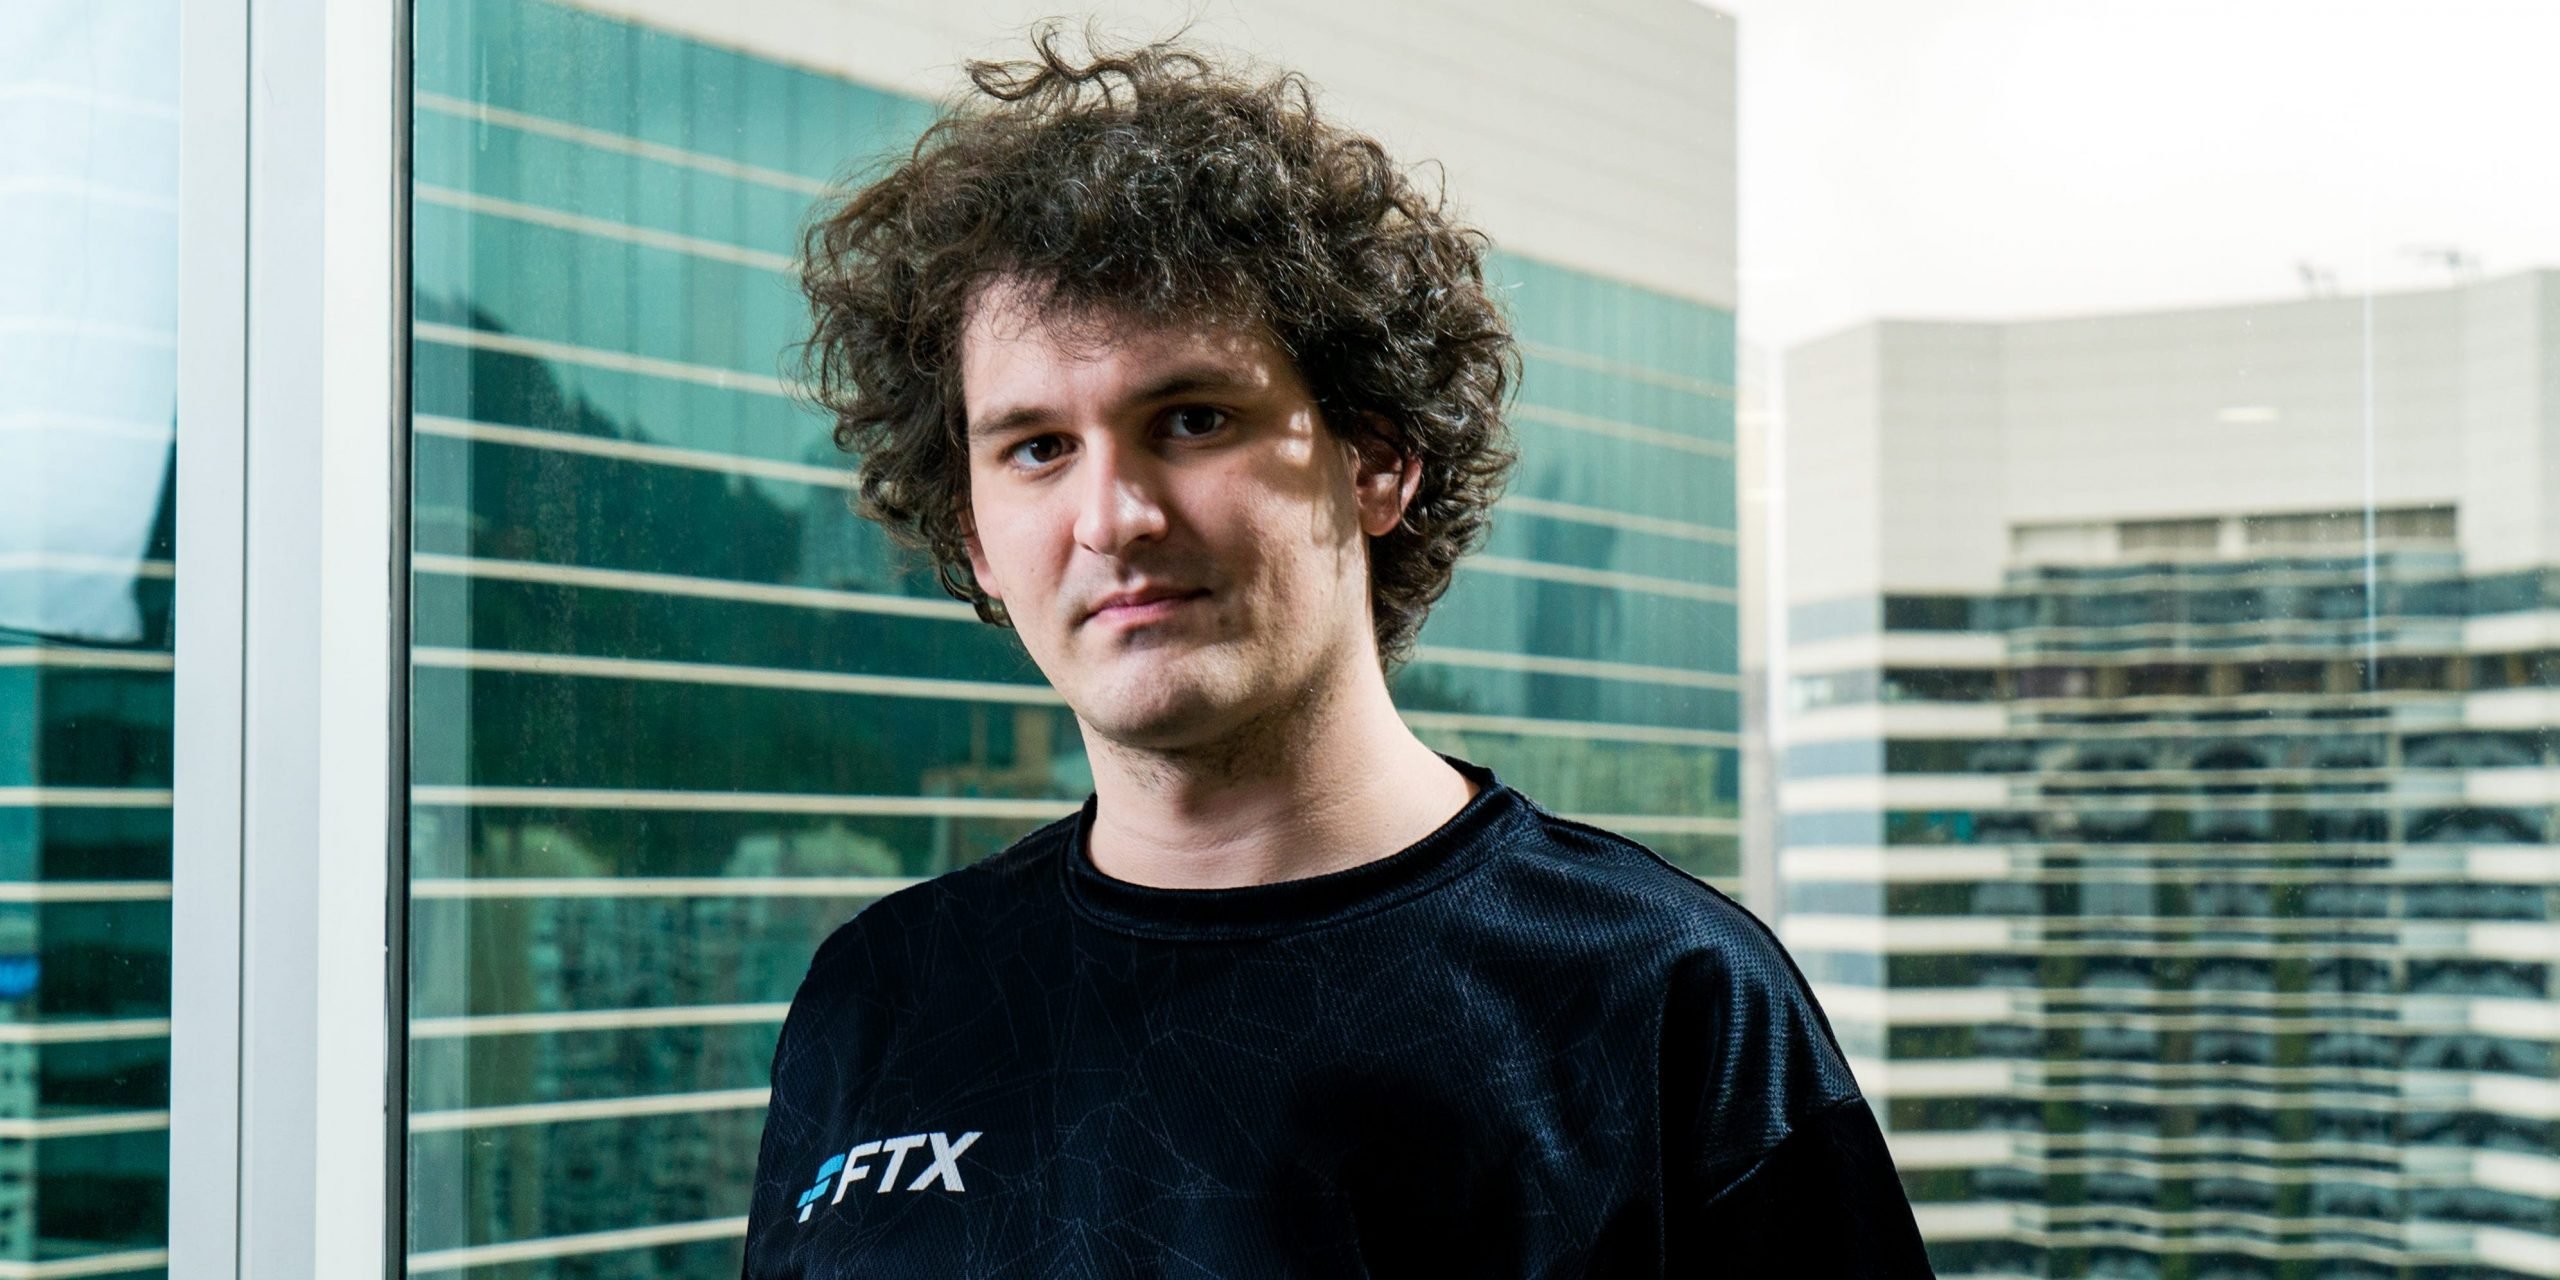 Sam Bankman-Fried FTX founder crypto exchange